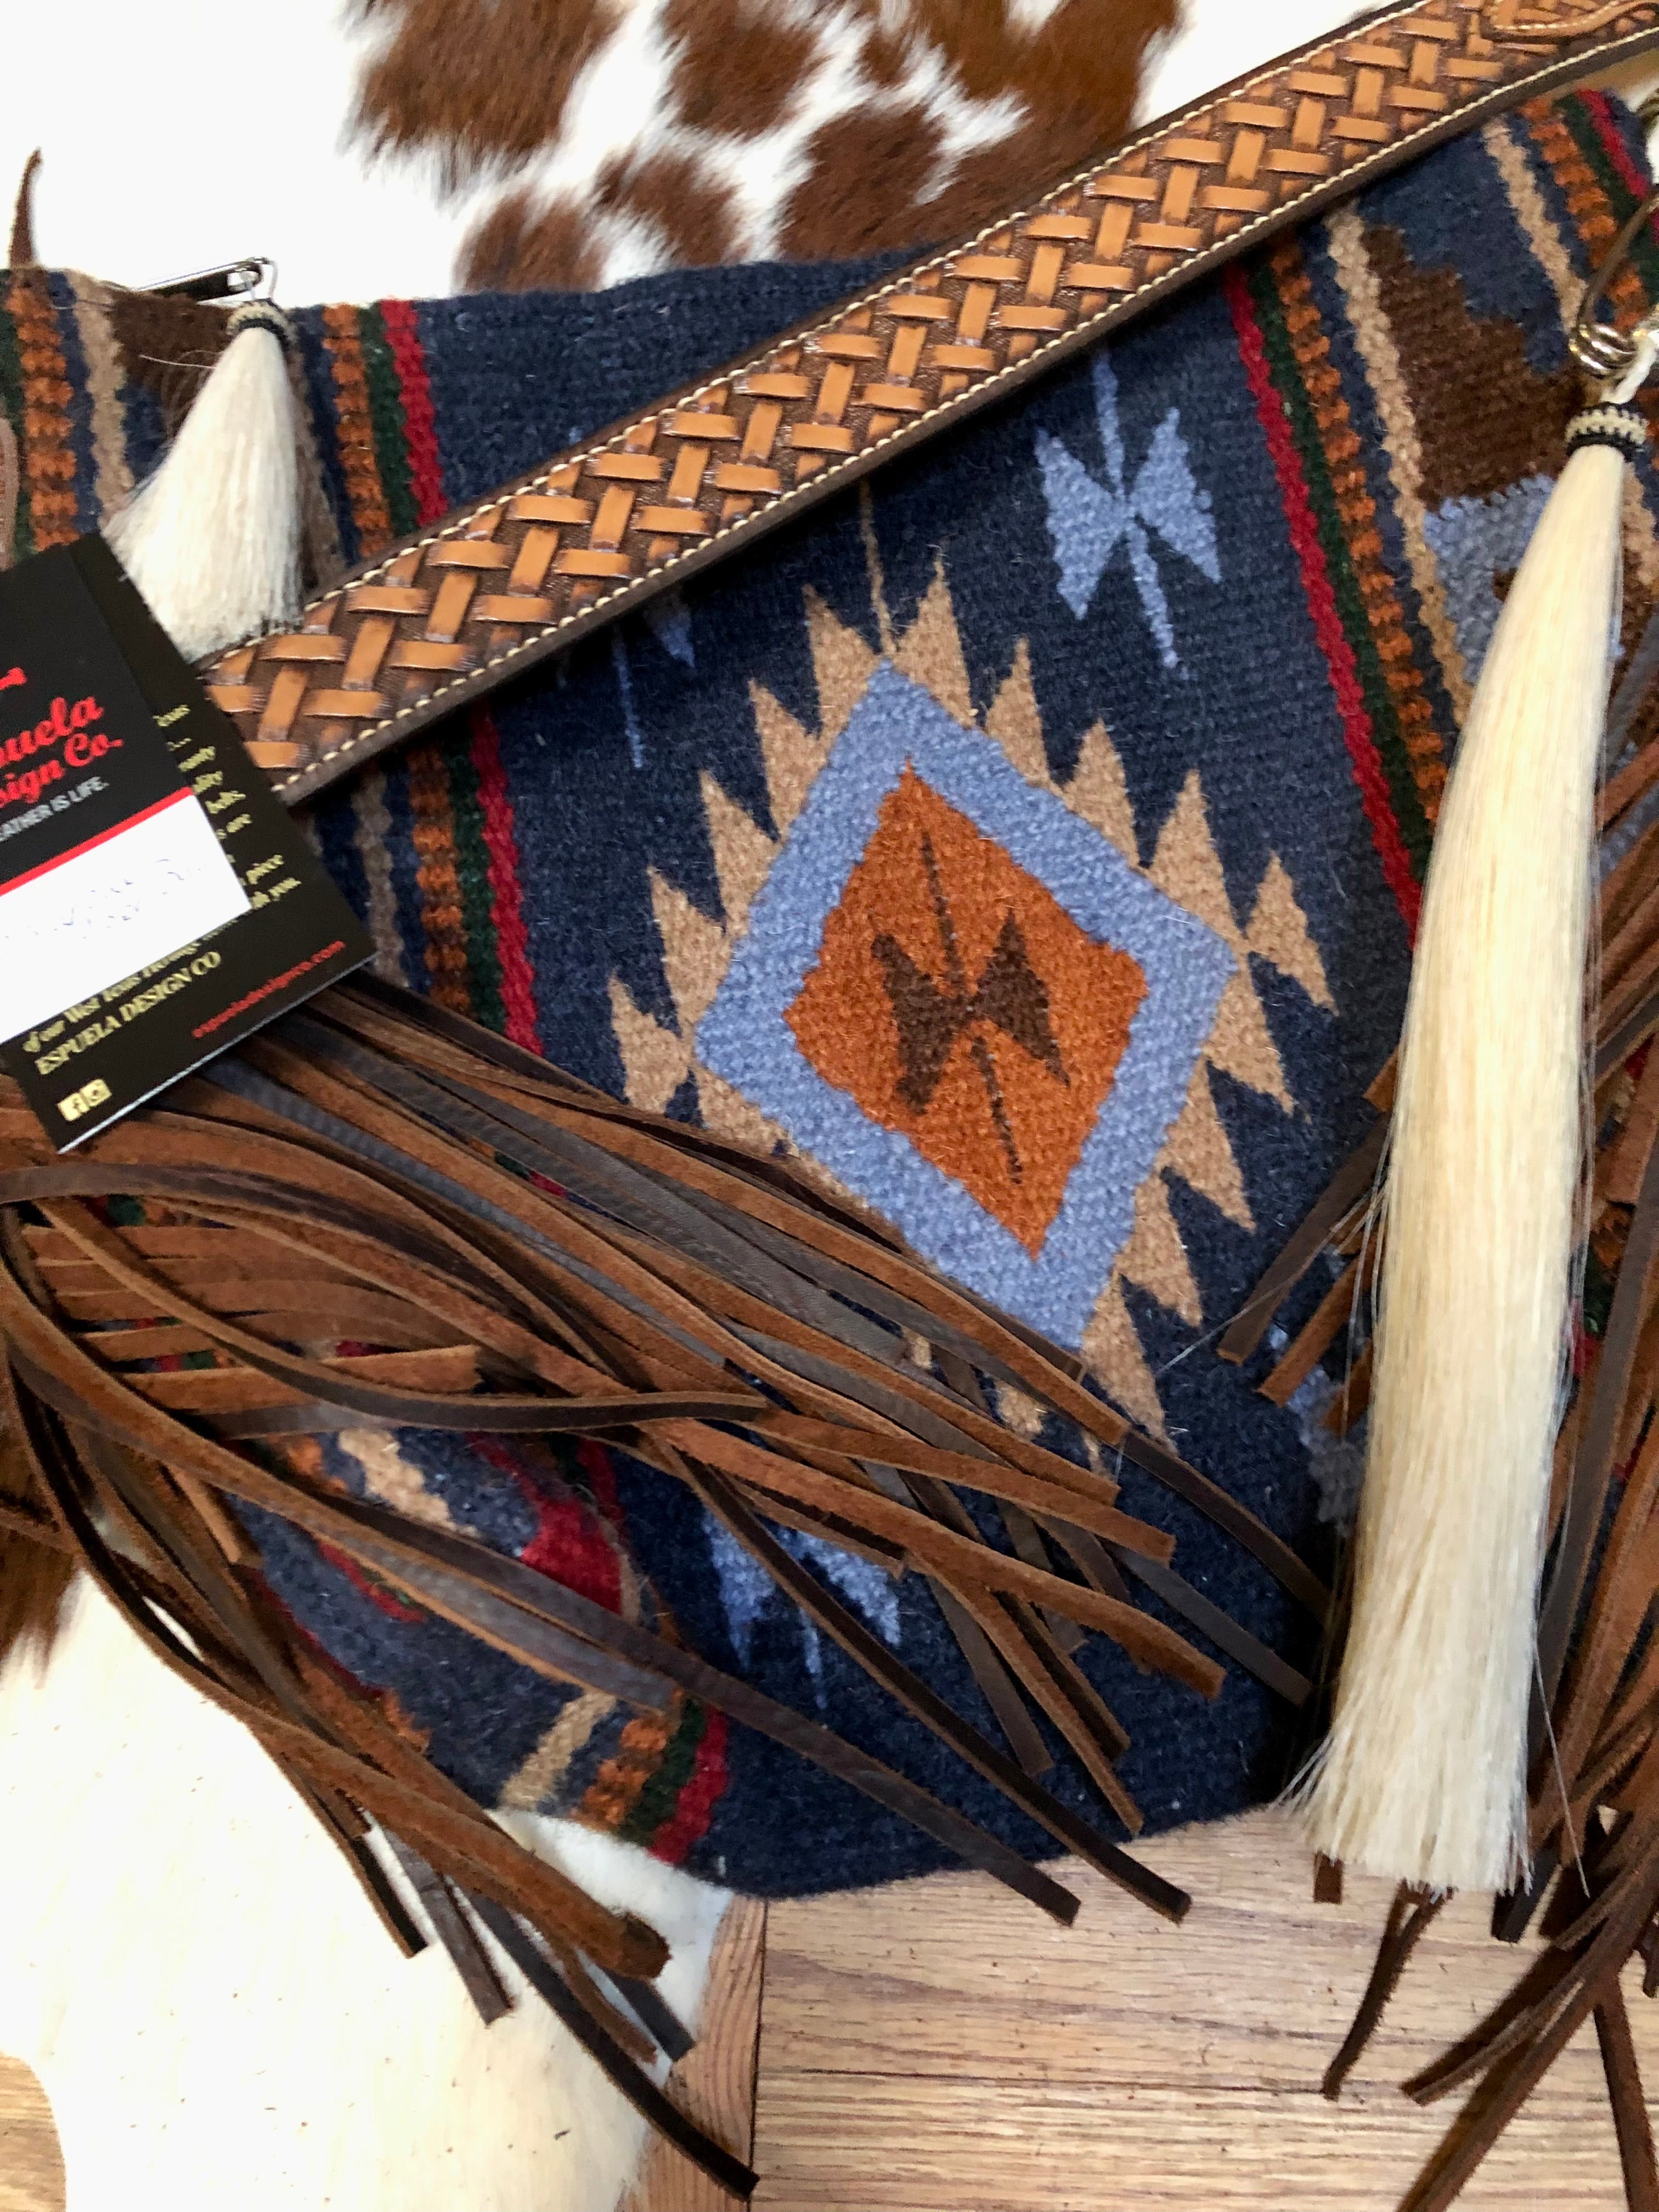 Comanche Moon Bag (12”x14”)